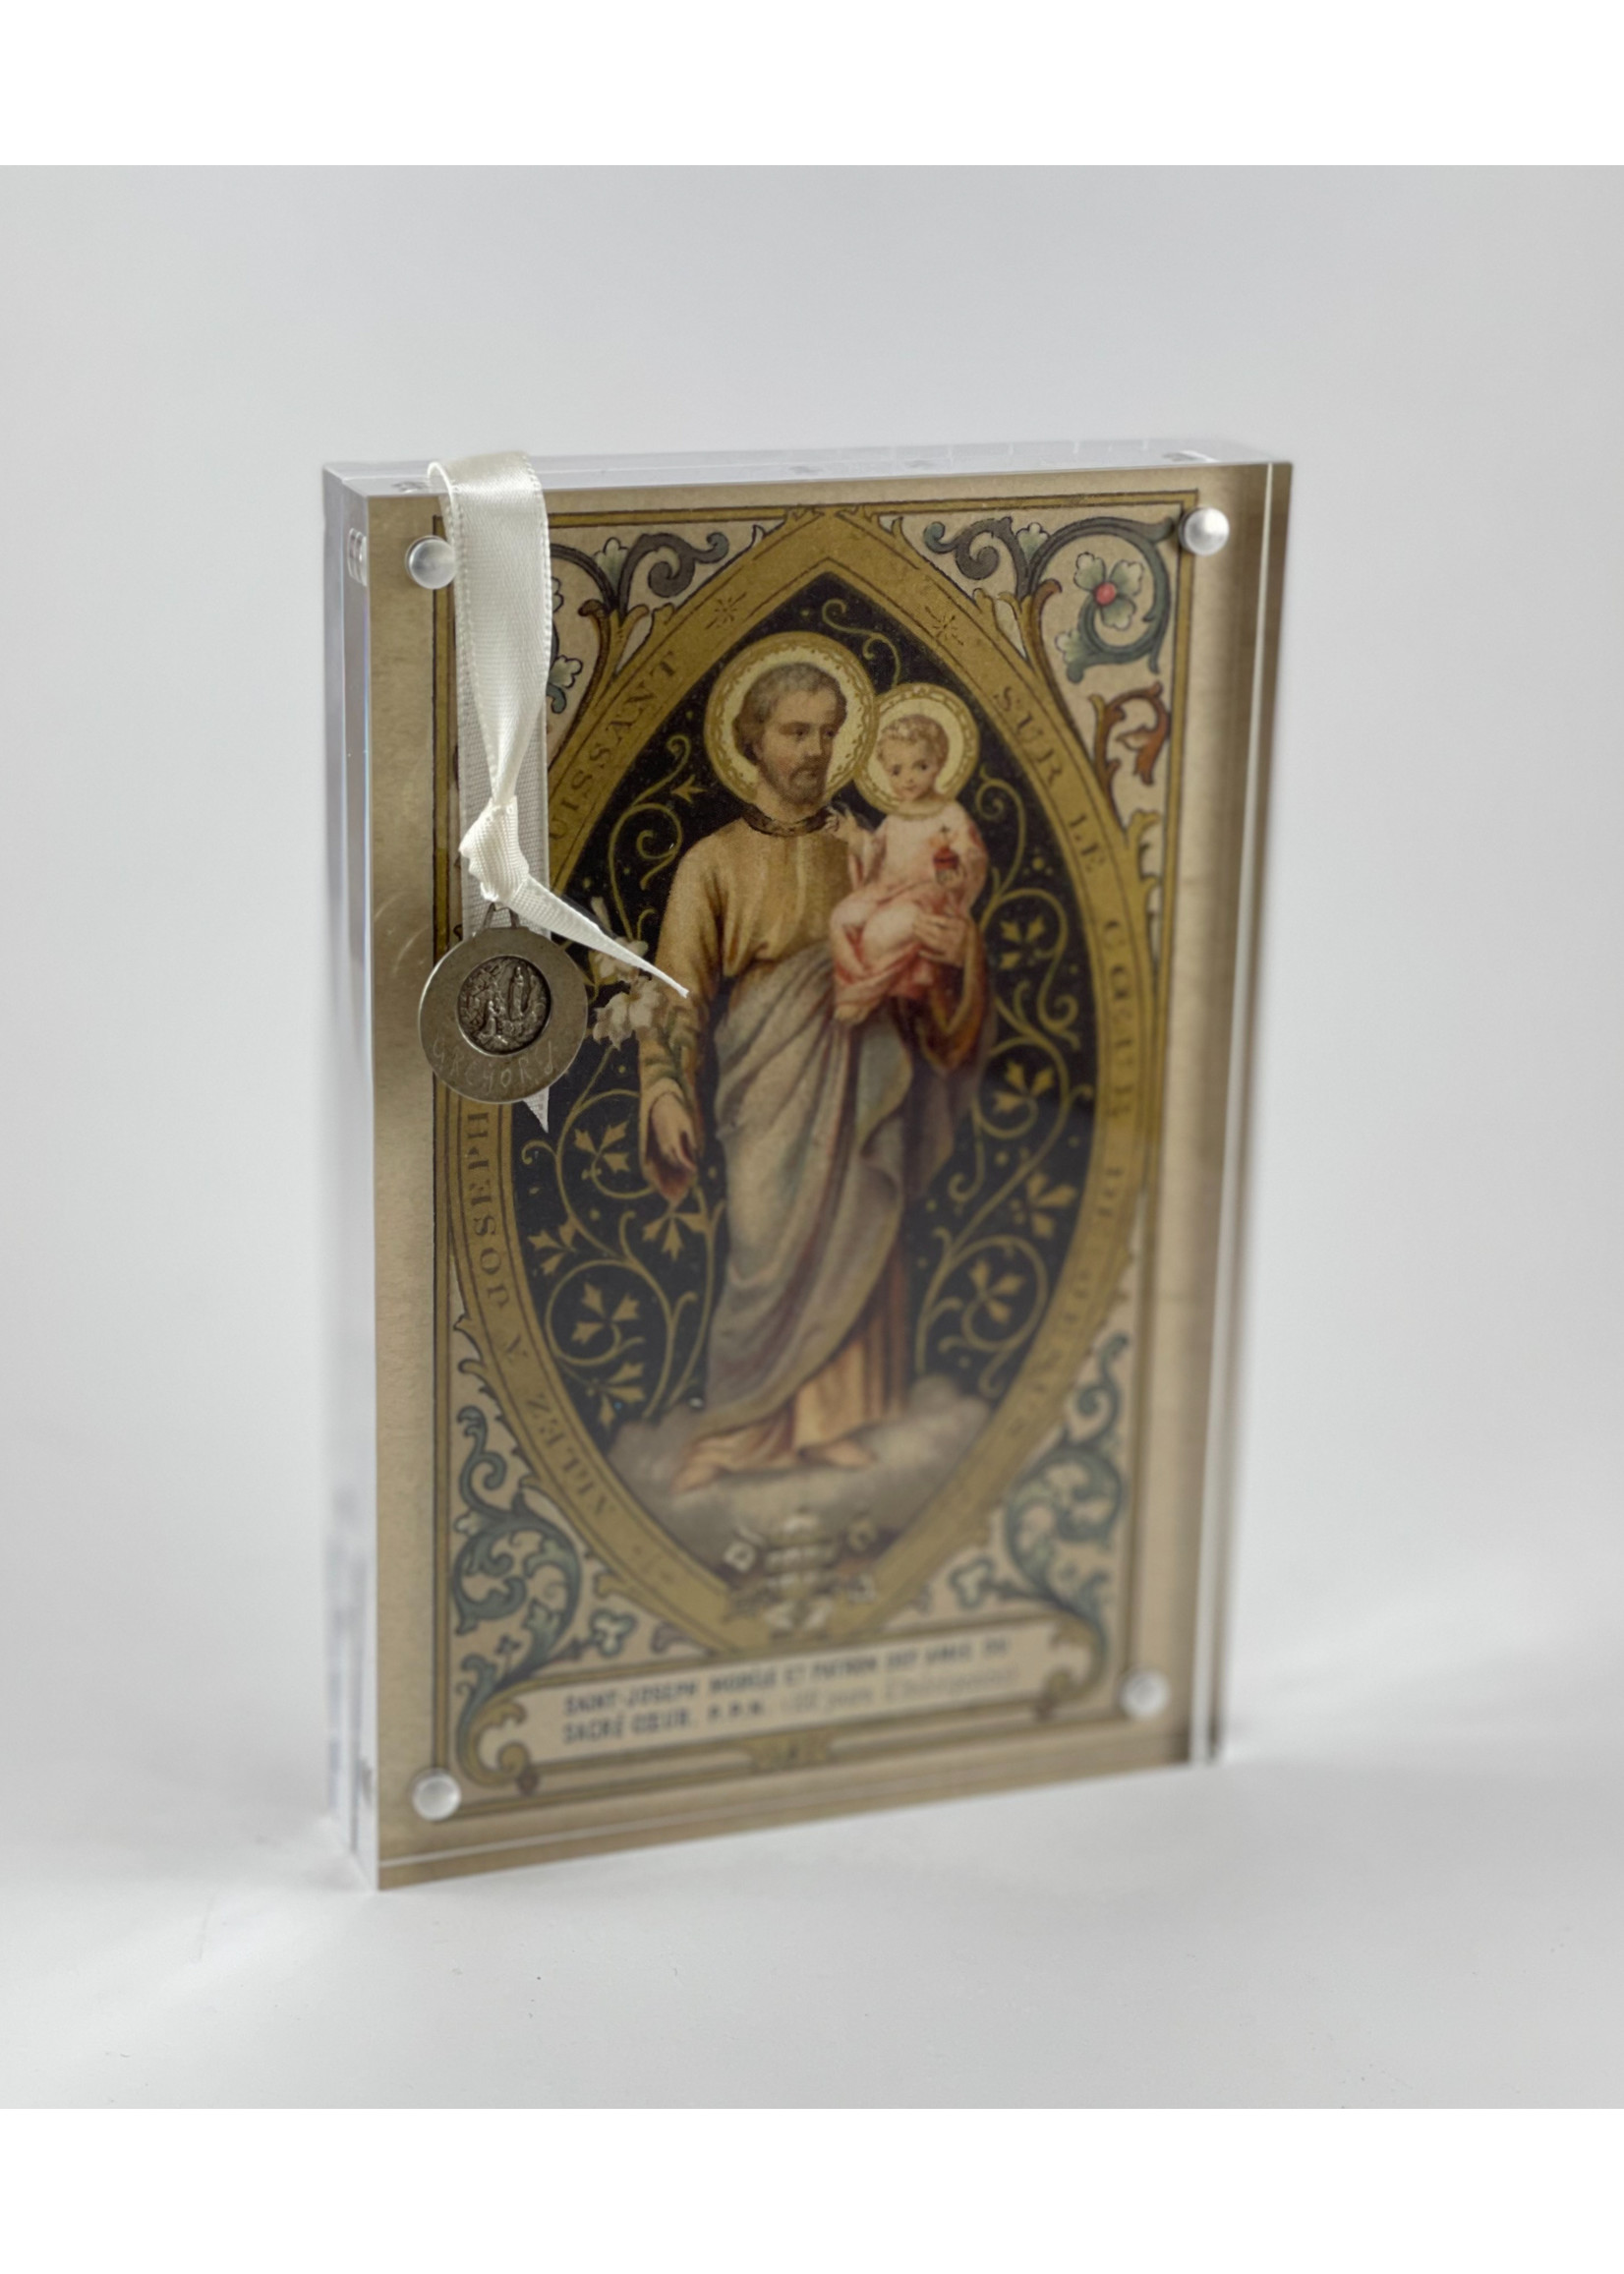 St Joseph prayer card and metal in acrylic